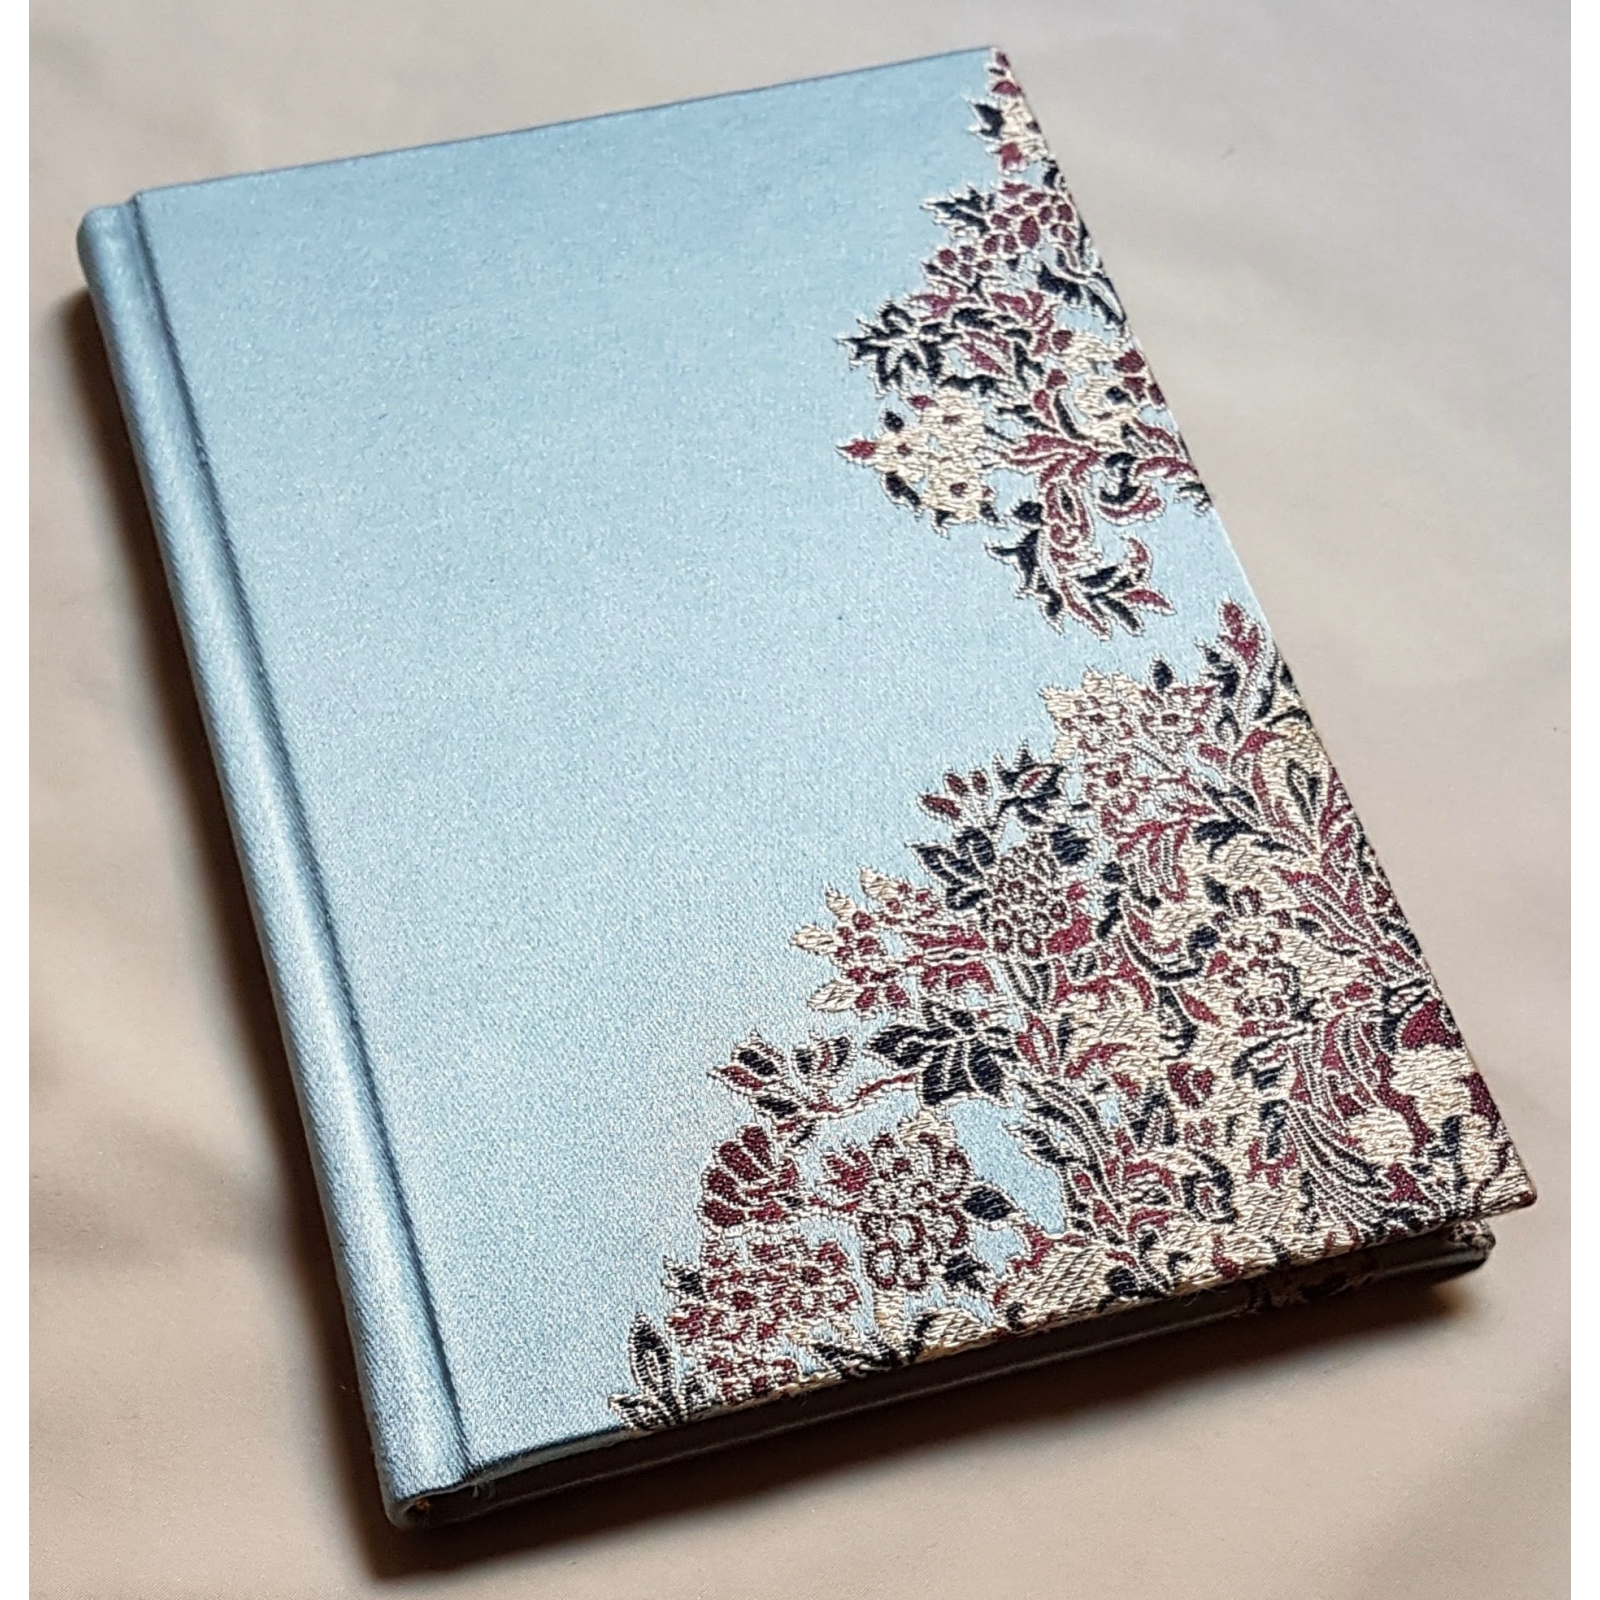 Hardcover luxury decor journal